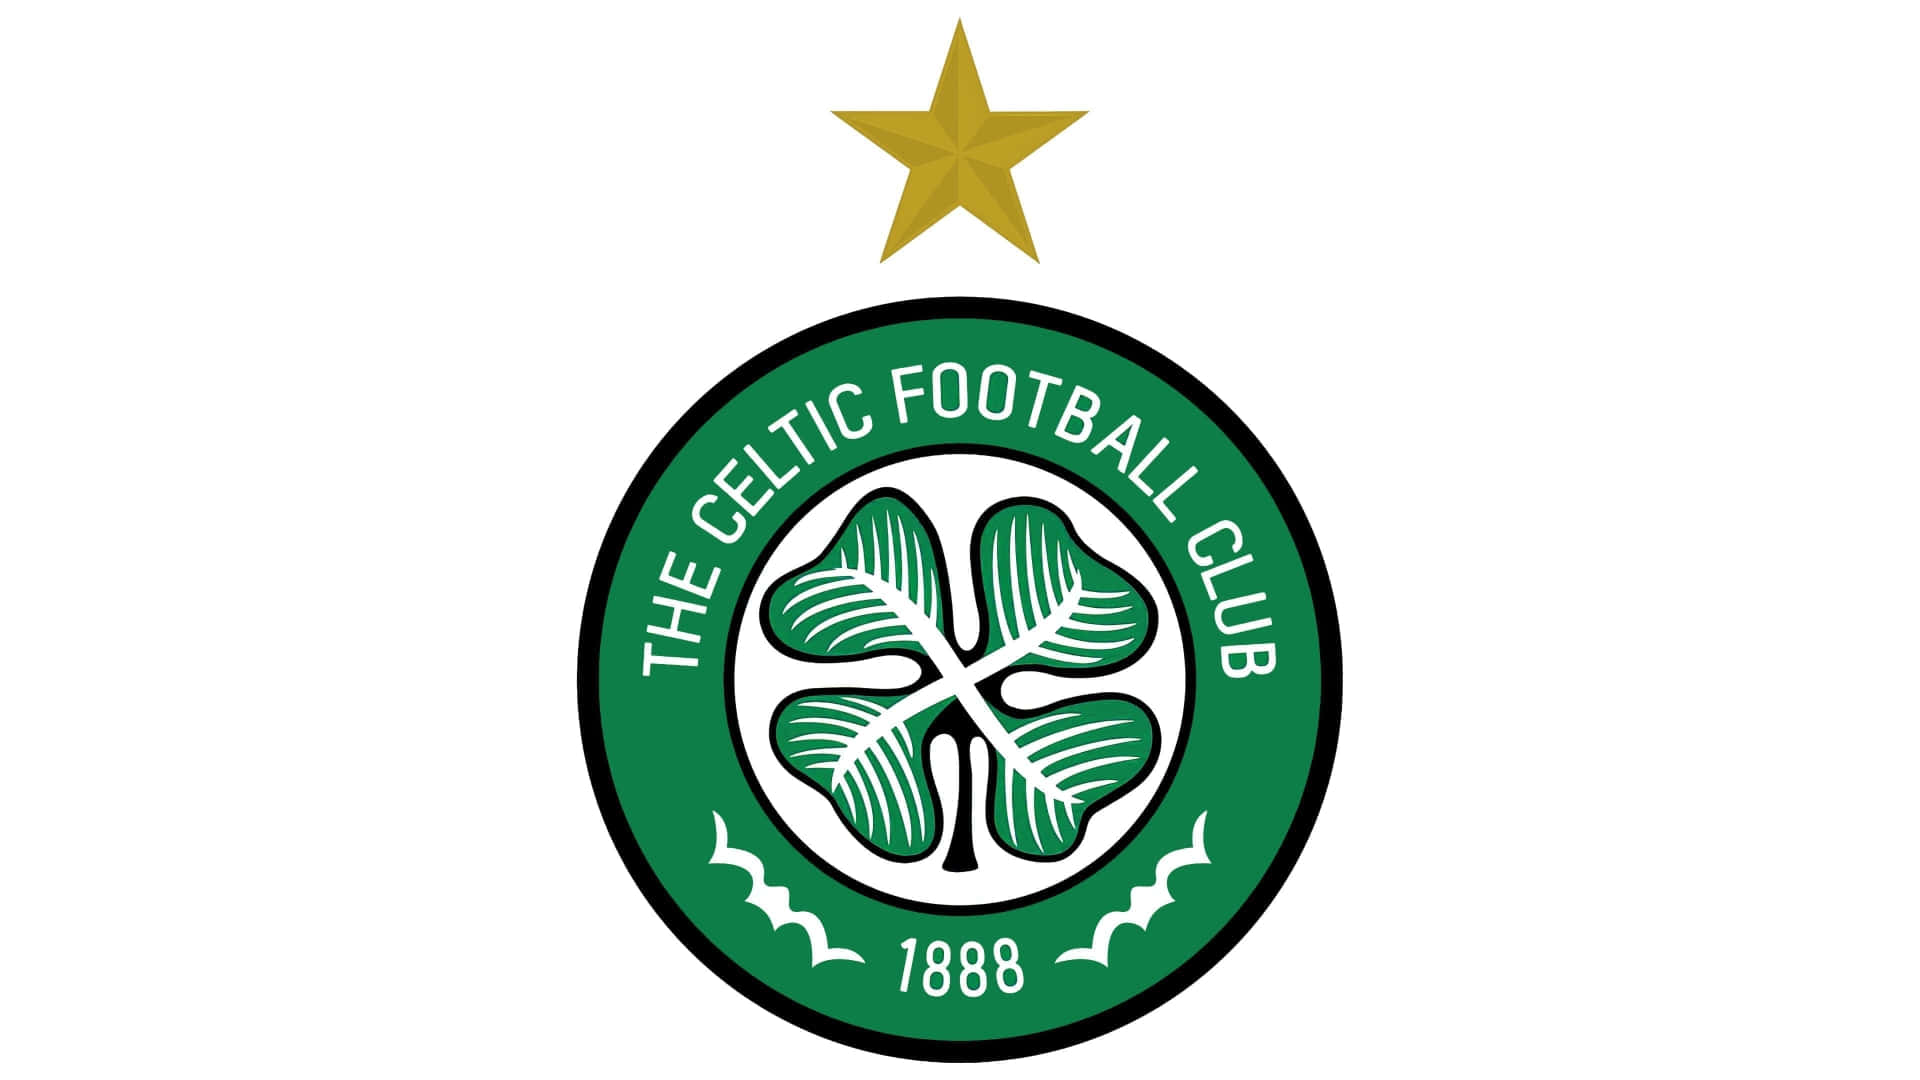 Dasgrün Und Weiß Des Celtic Football Club Wallpaper